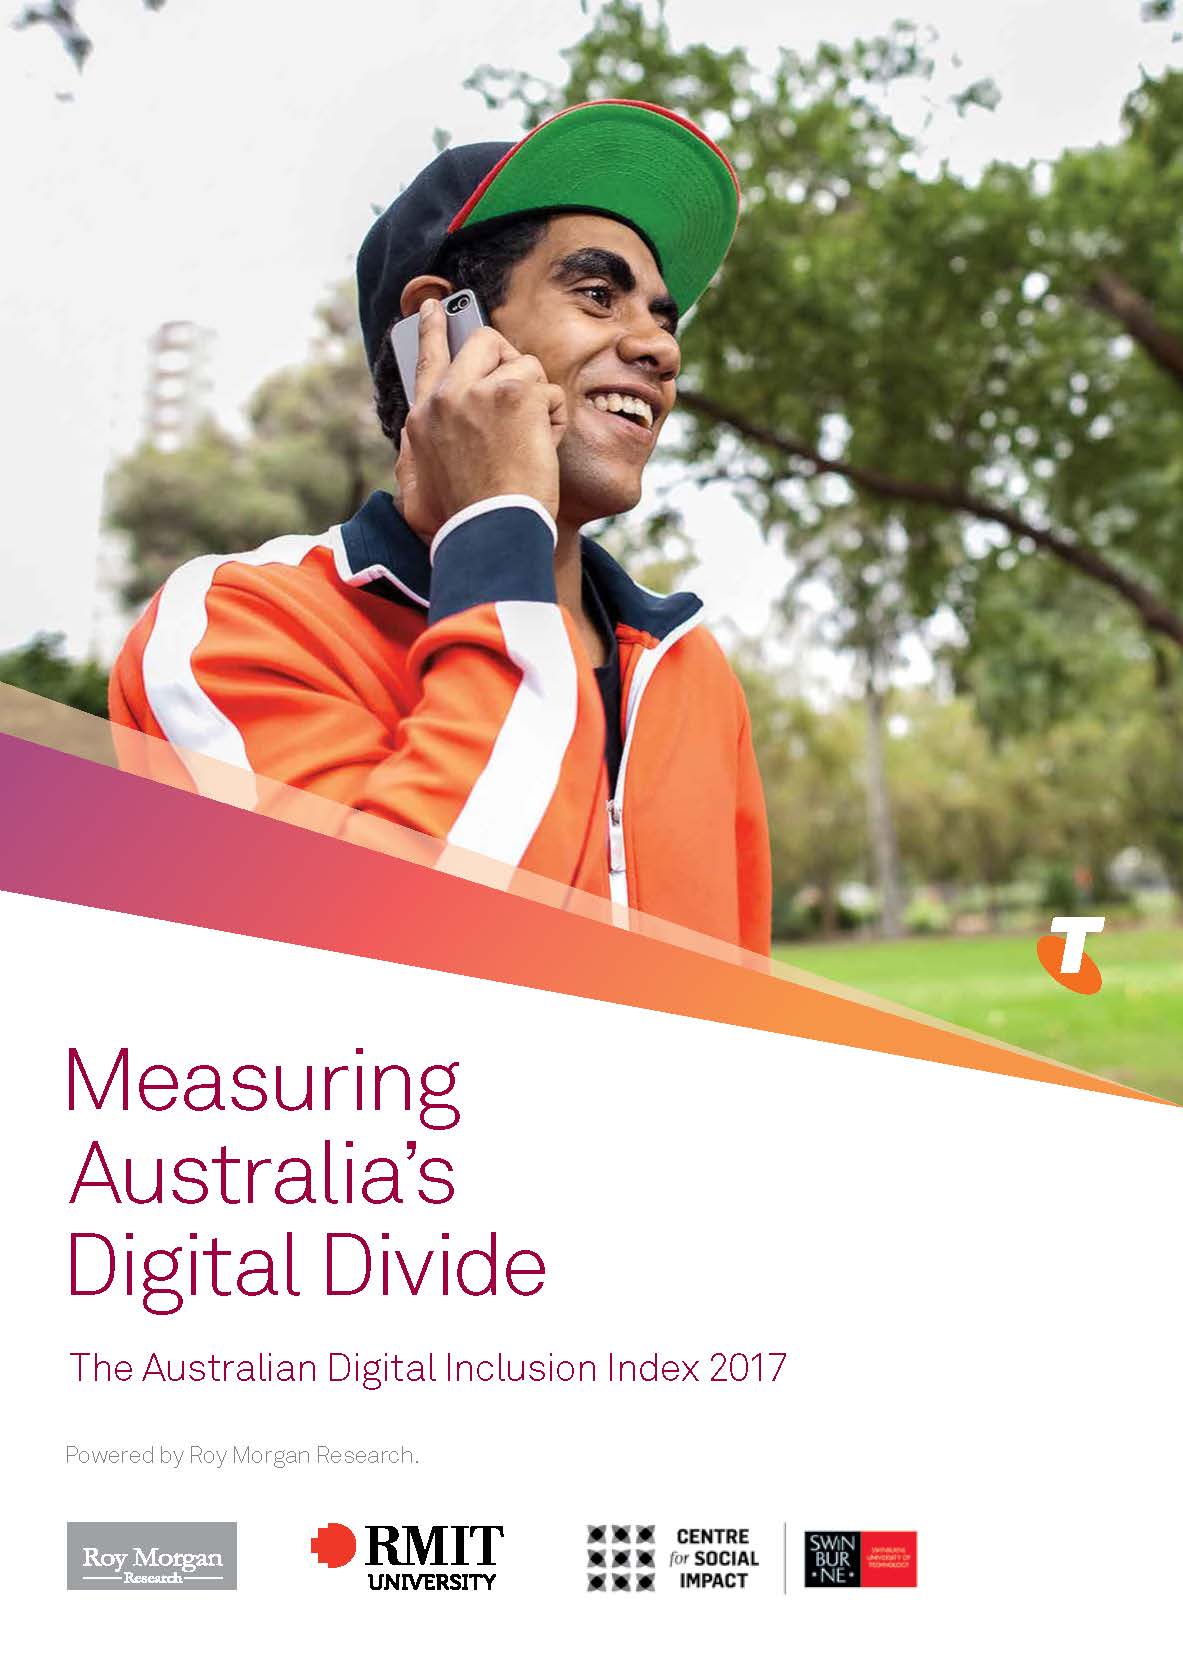 The 2017 Australian Digital Inclusion Index report